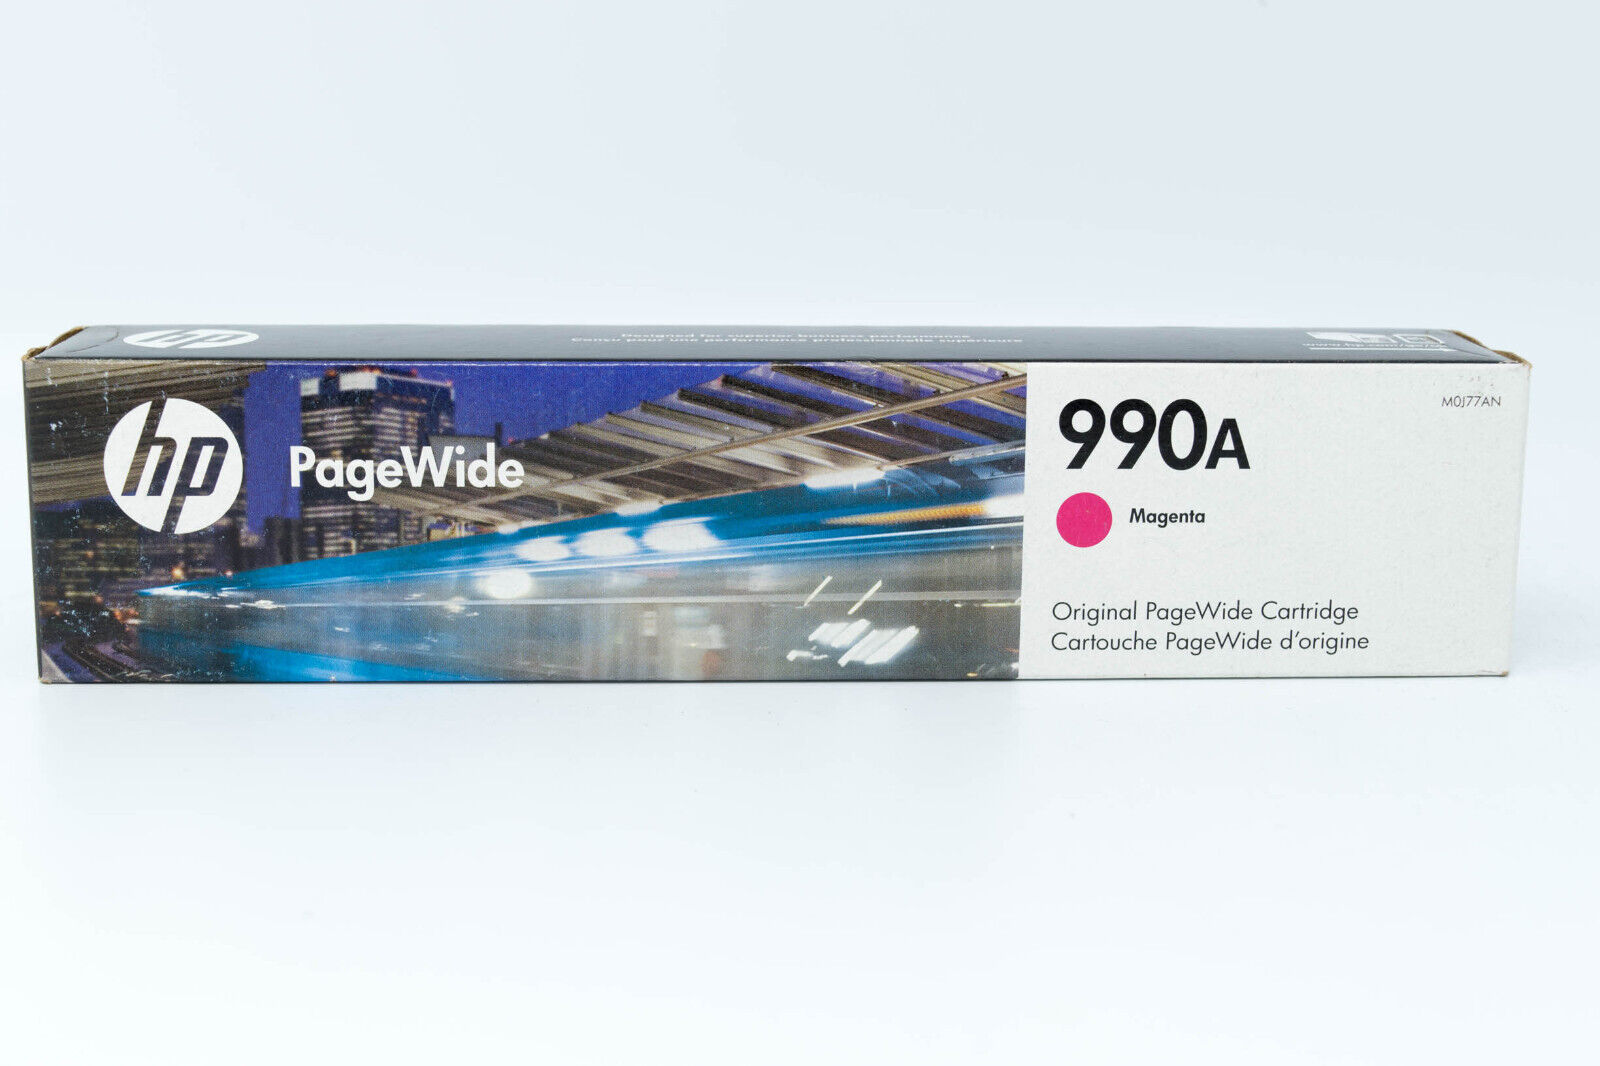 HP 990A - Original PageWide Cartridge Magenta (M0J77AN) -EXP 02/21- NEW